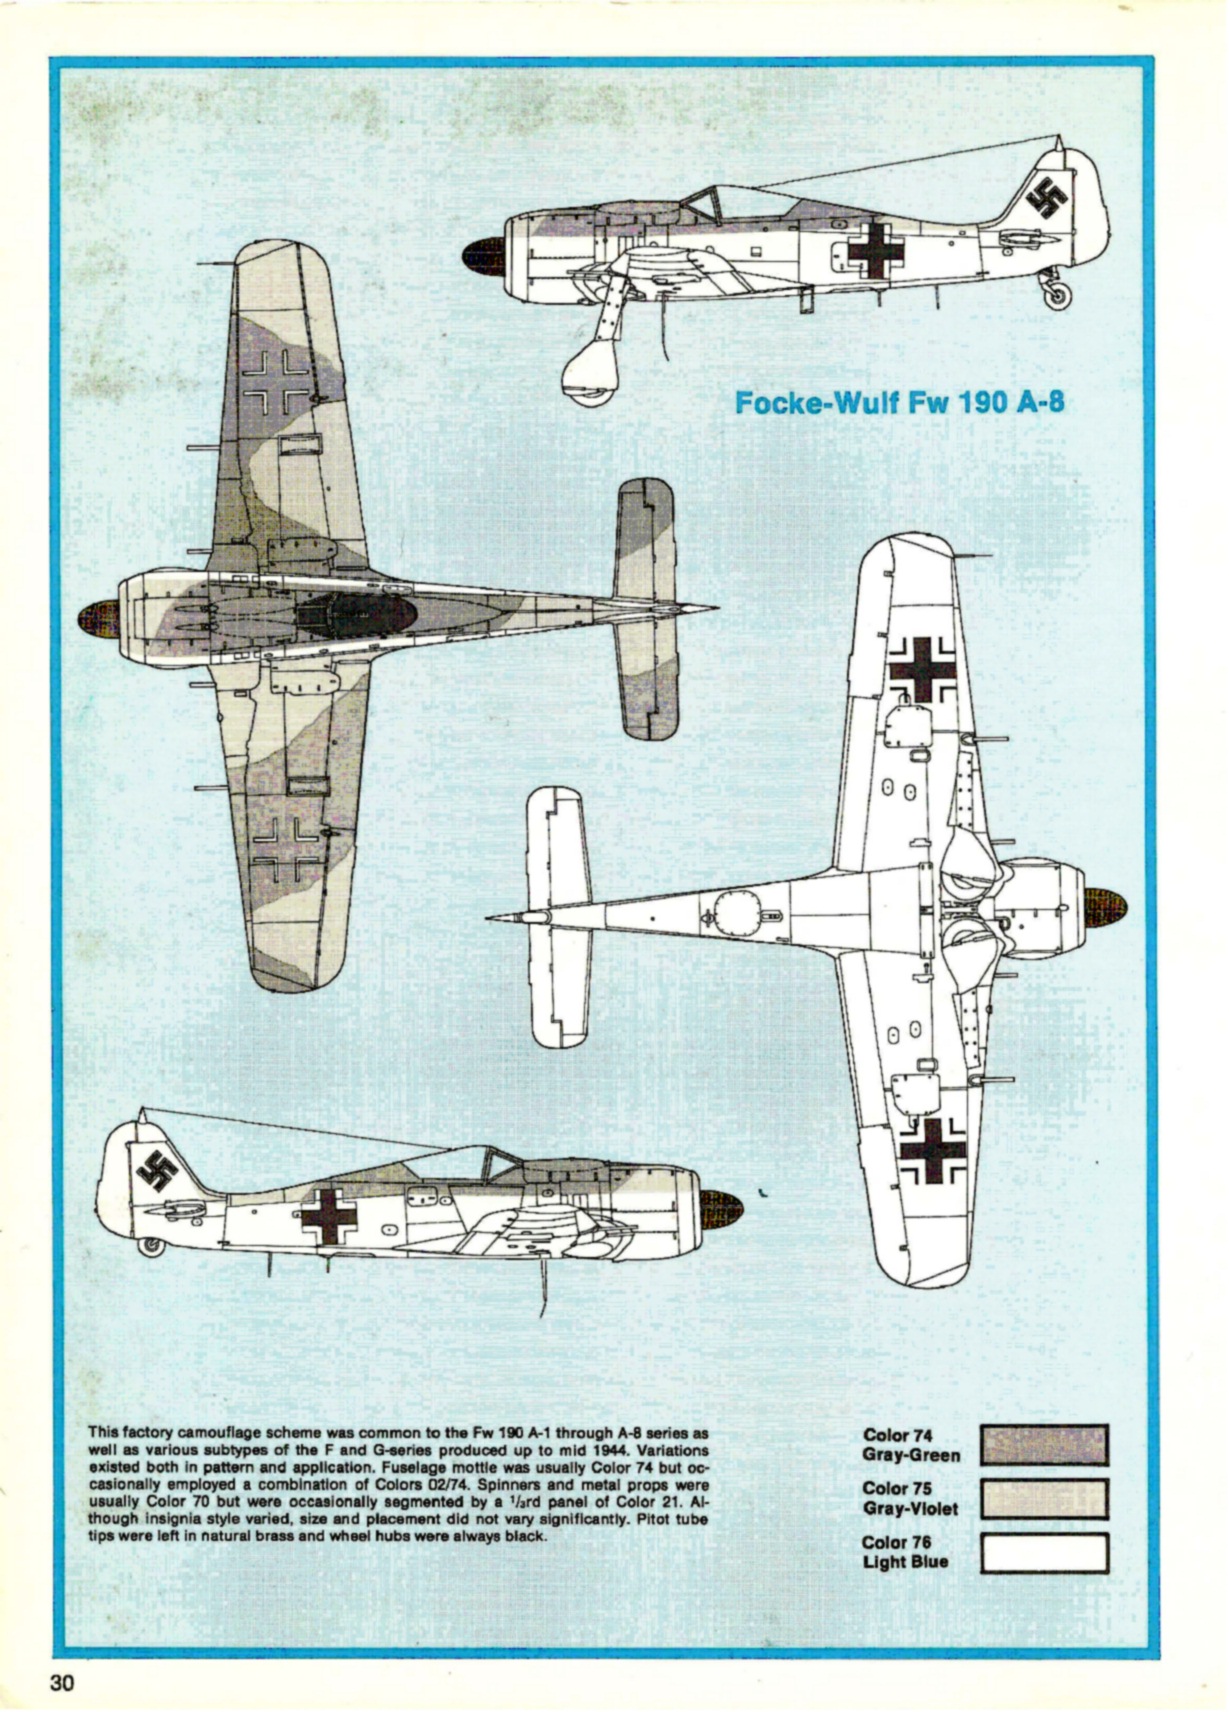 Monogram Fw 190 A-8 camo scheme.jpg